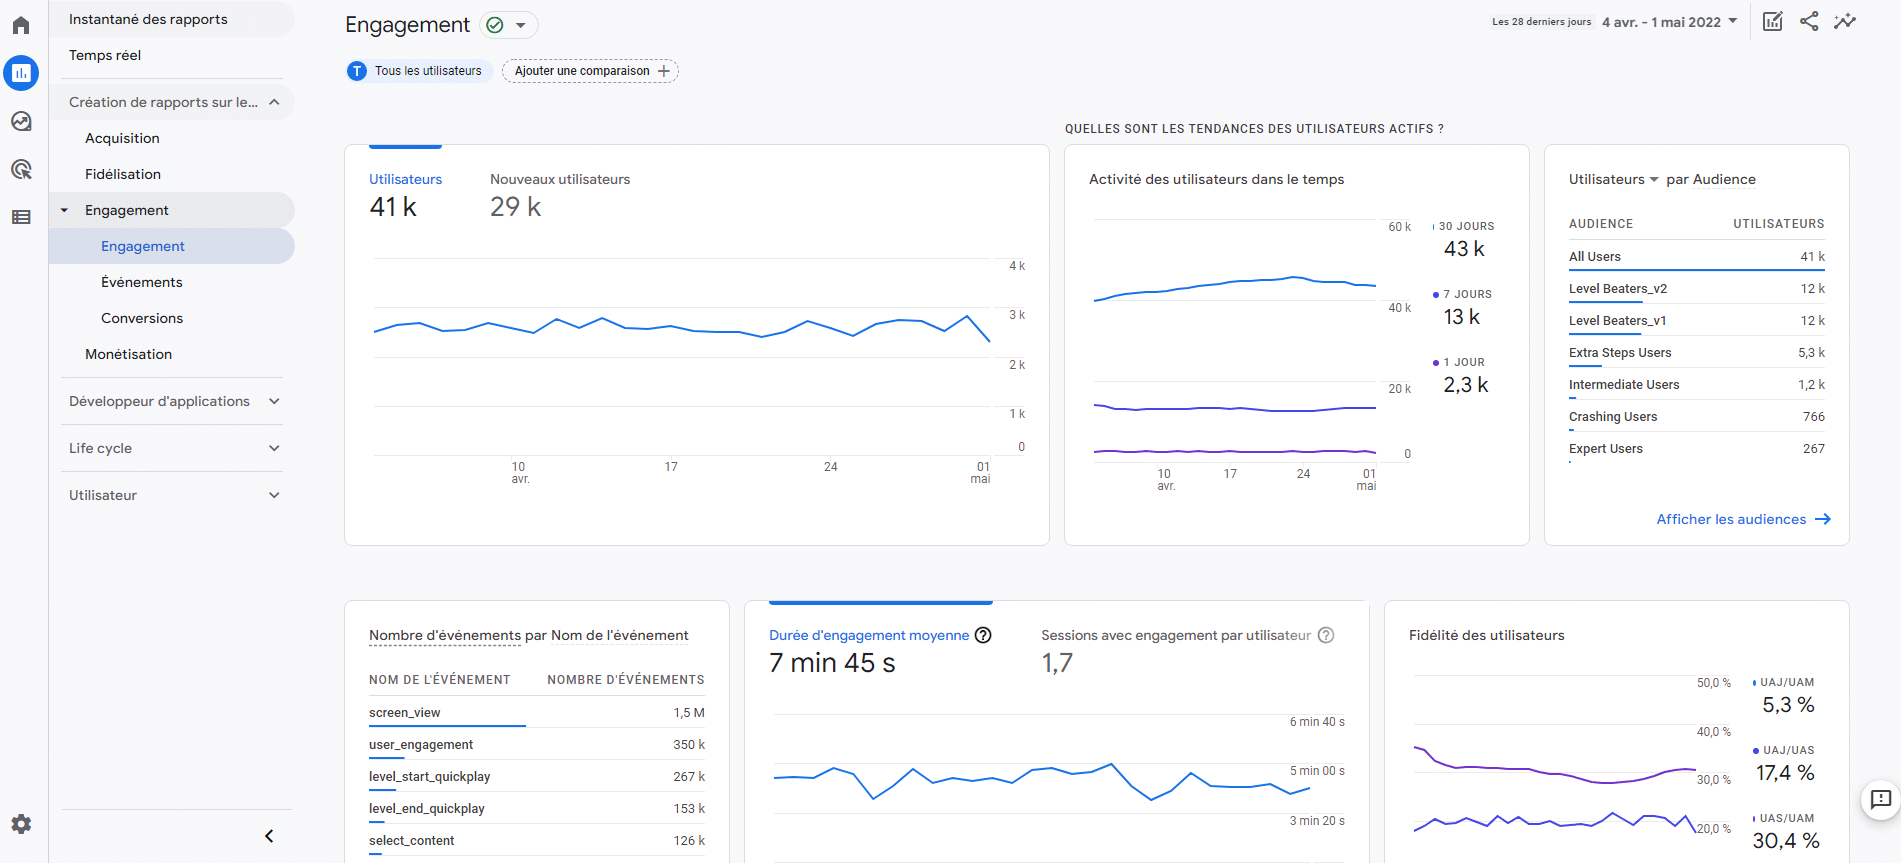 Rapport engagement des utilisateurs Google Analytics 4